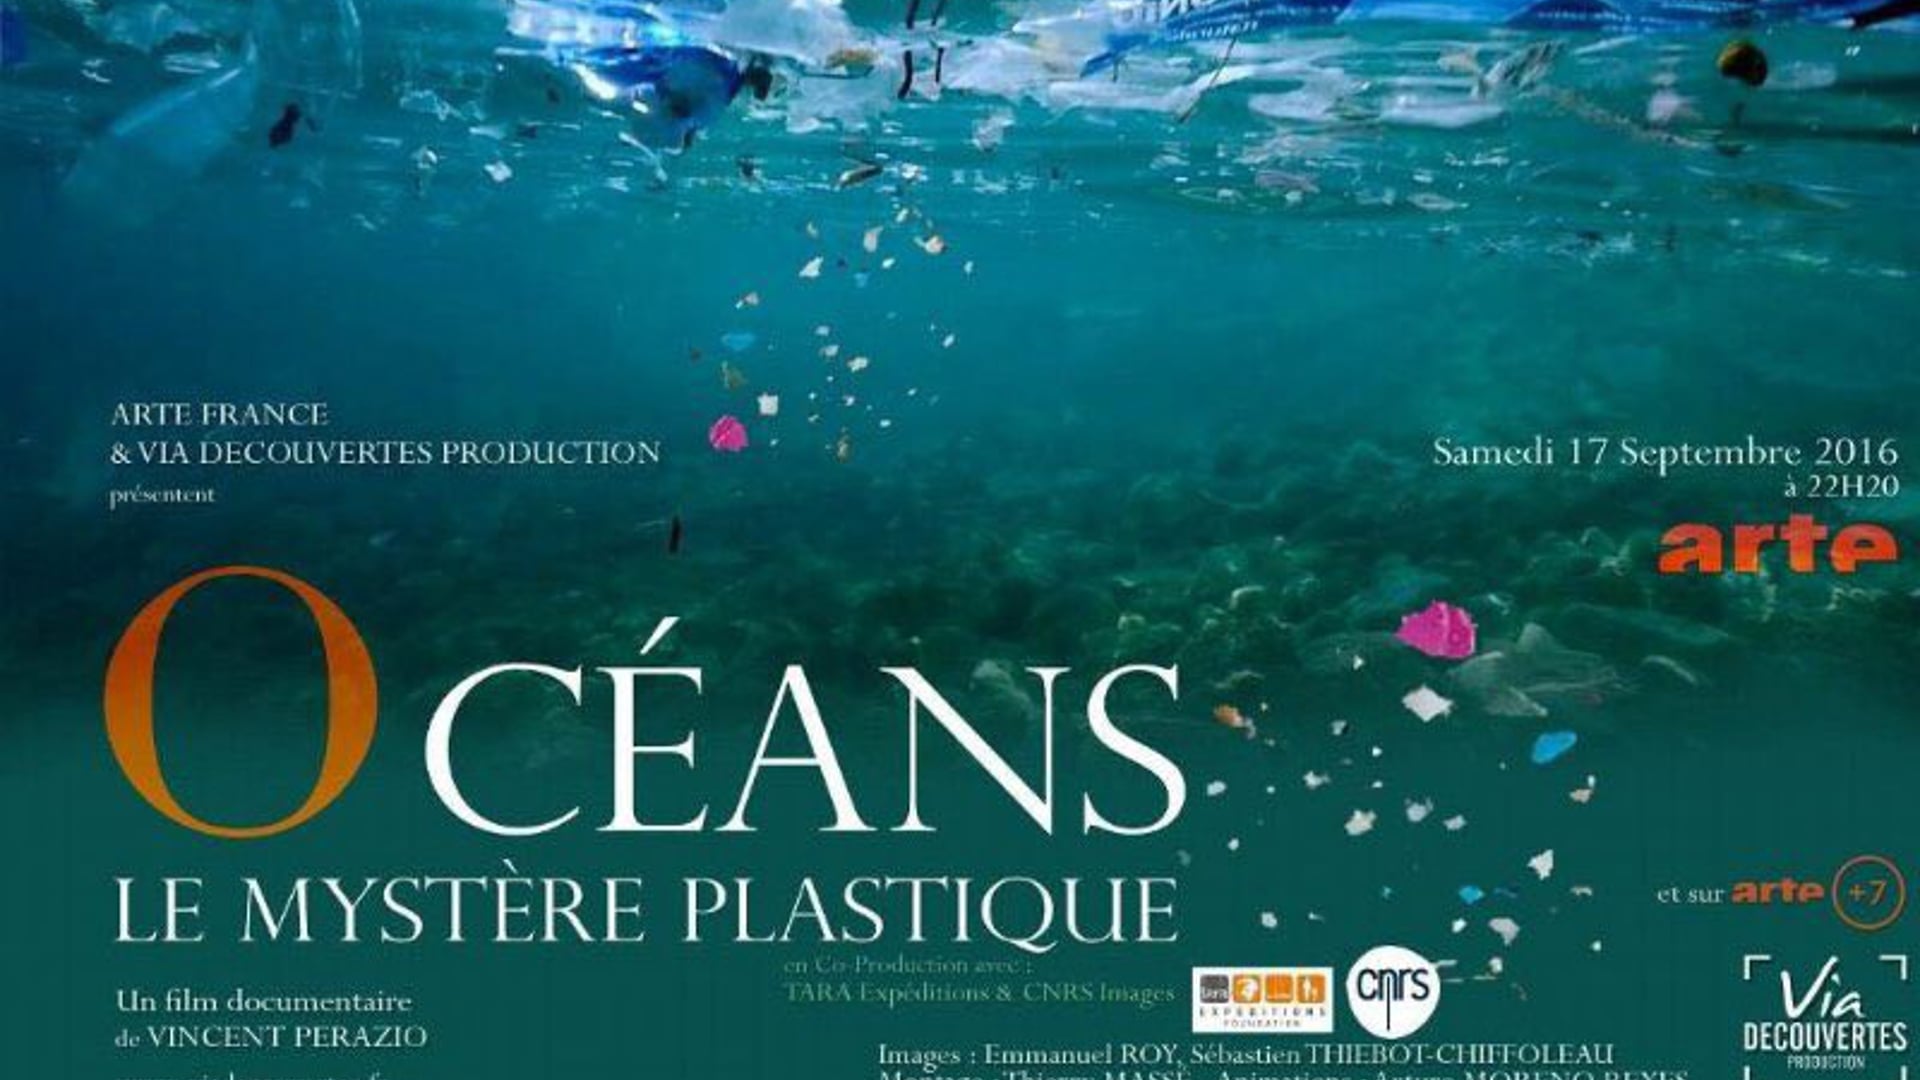 OCEANS, LE MYSTERE PLASTIQUE - Extract